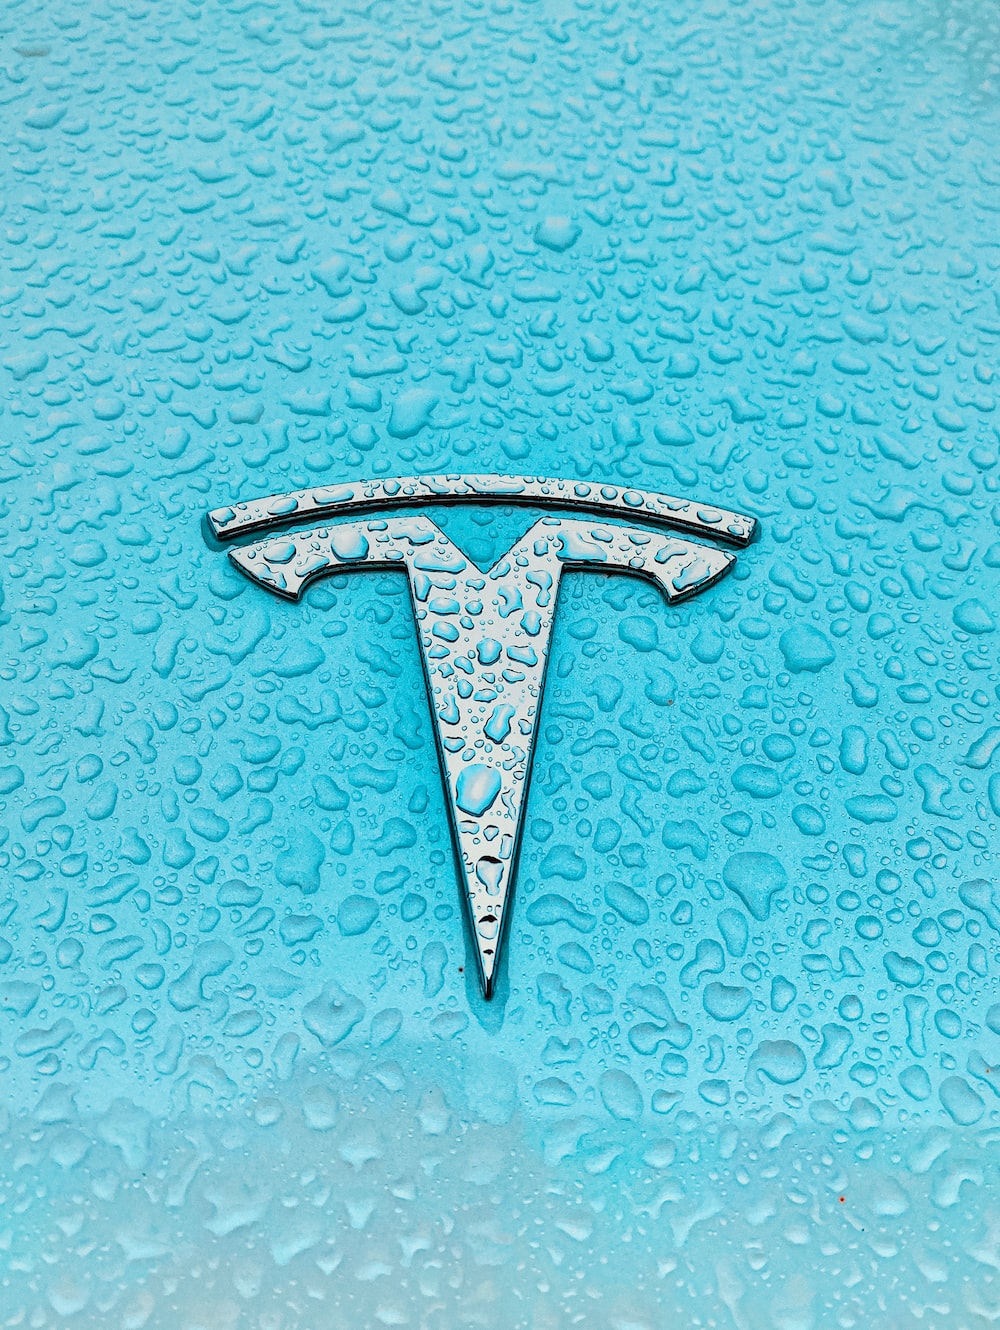 Tesla Car Picture. Download Free Image